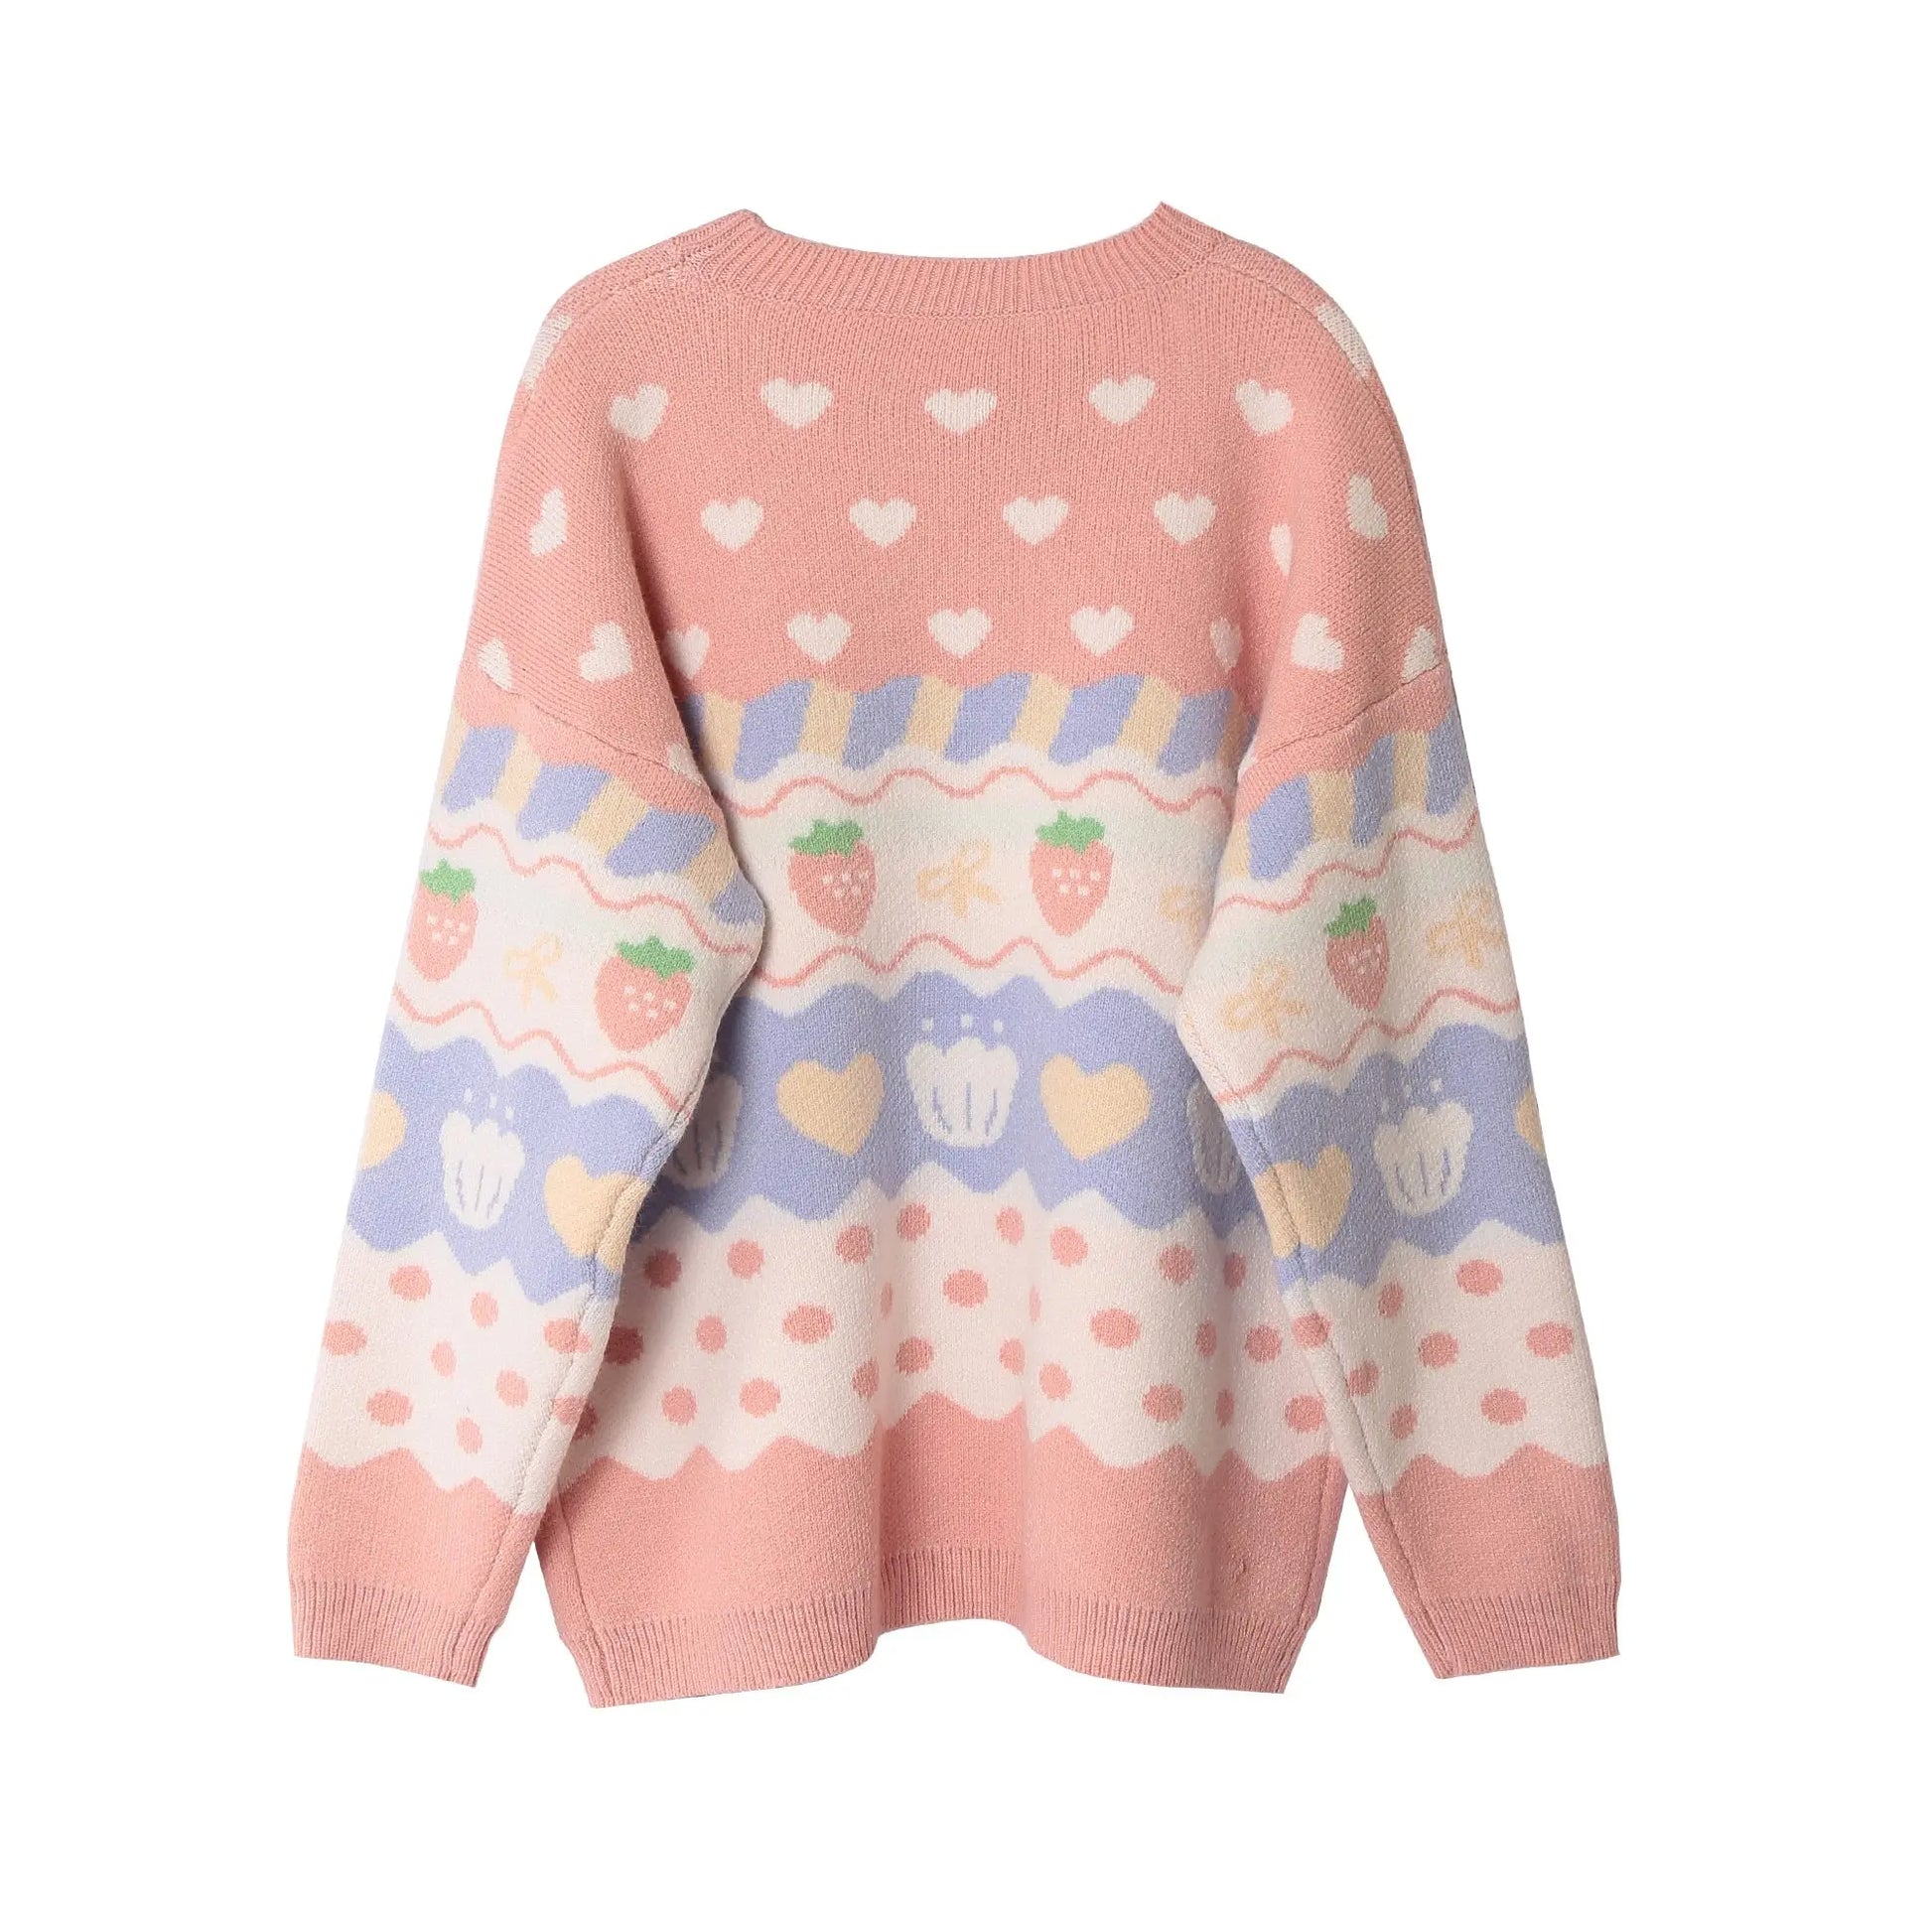 Kawaii Pink Strawberry Harajuku Sweater - Pink / One Size - Sweaters - Shirts & Tops - 6 - 2024